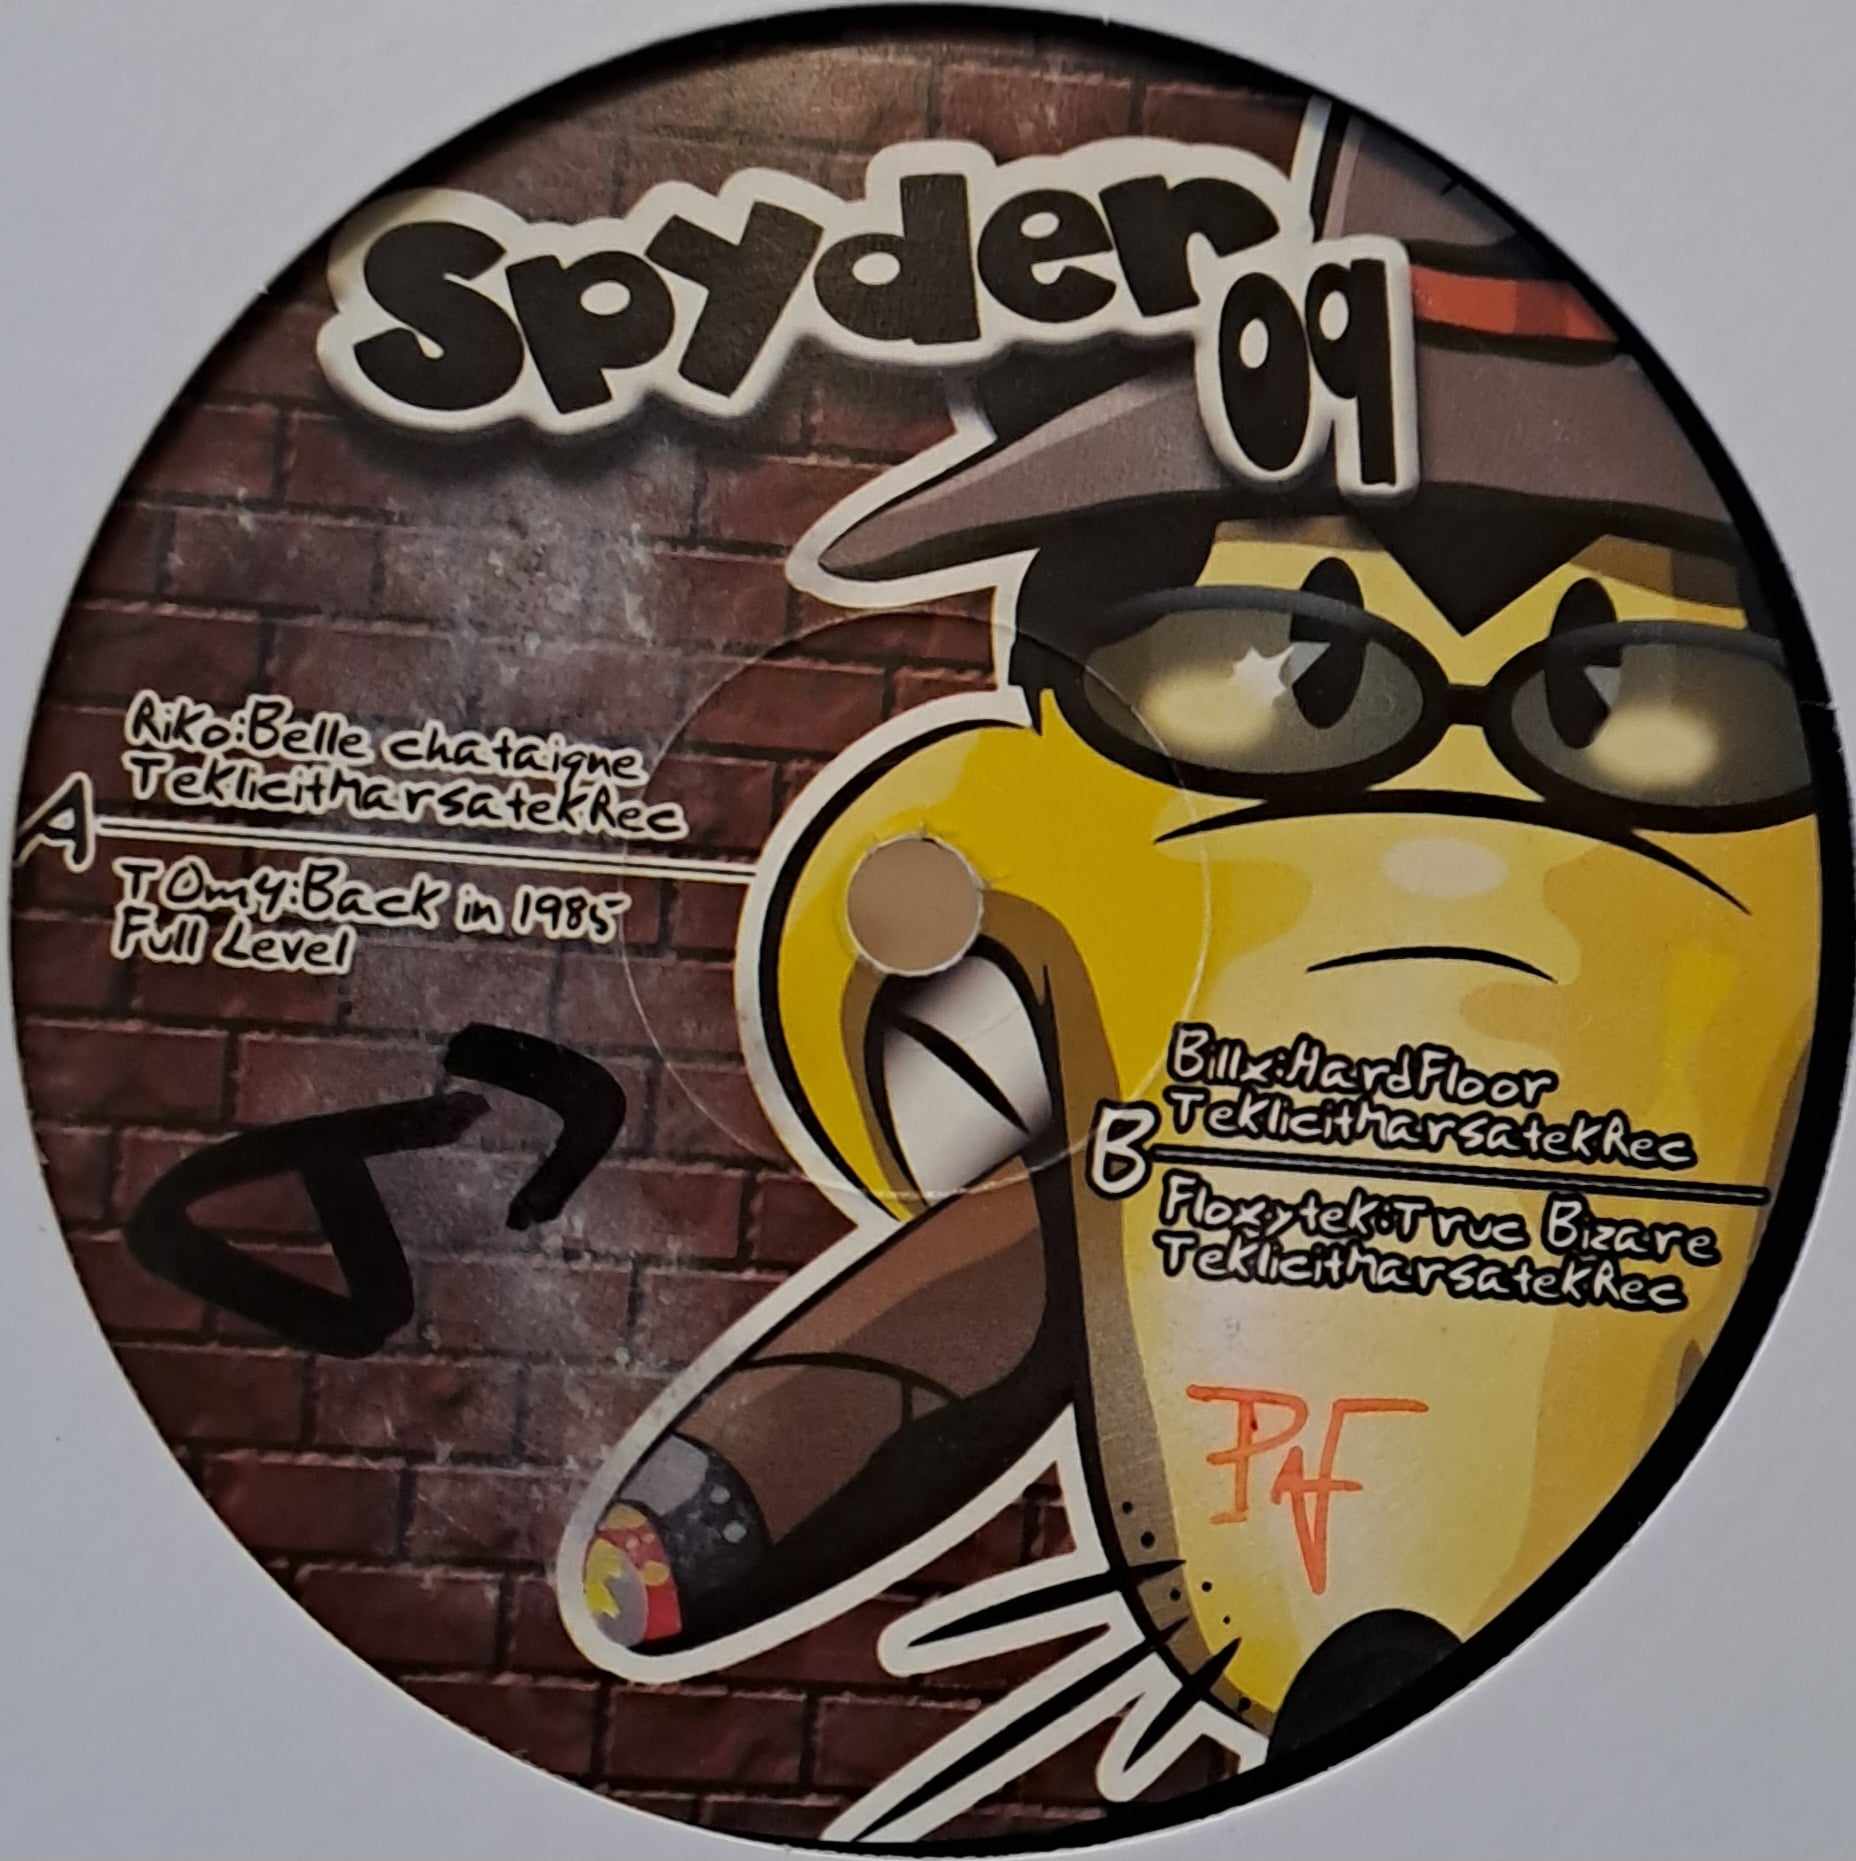 Spyder 09 - vinyle freetekno